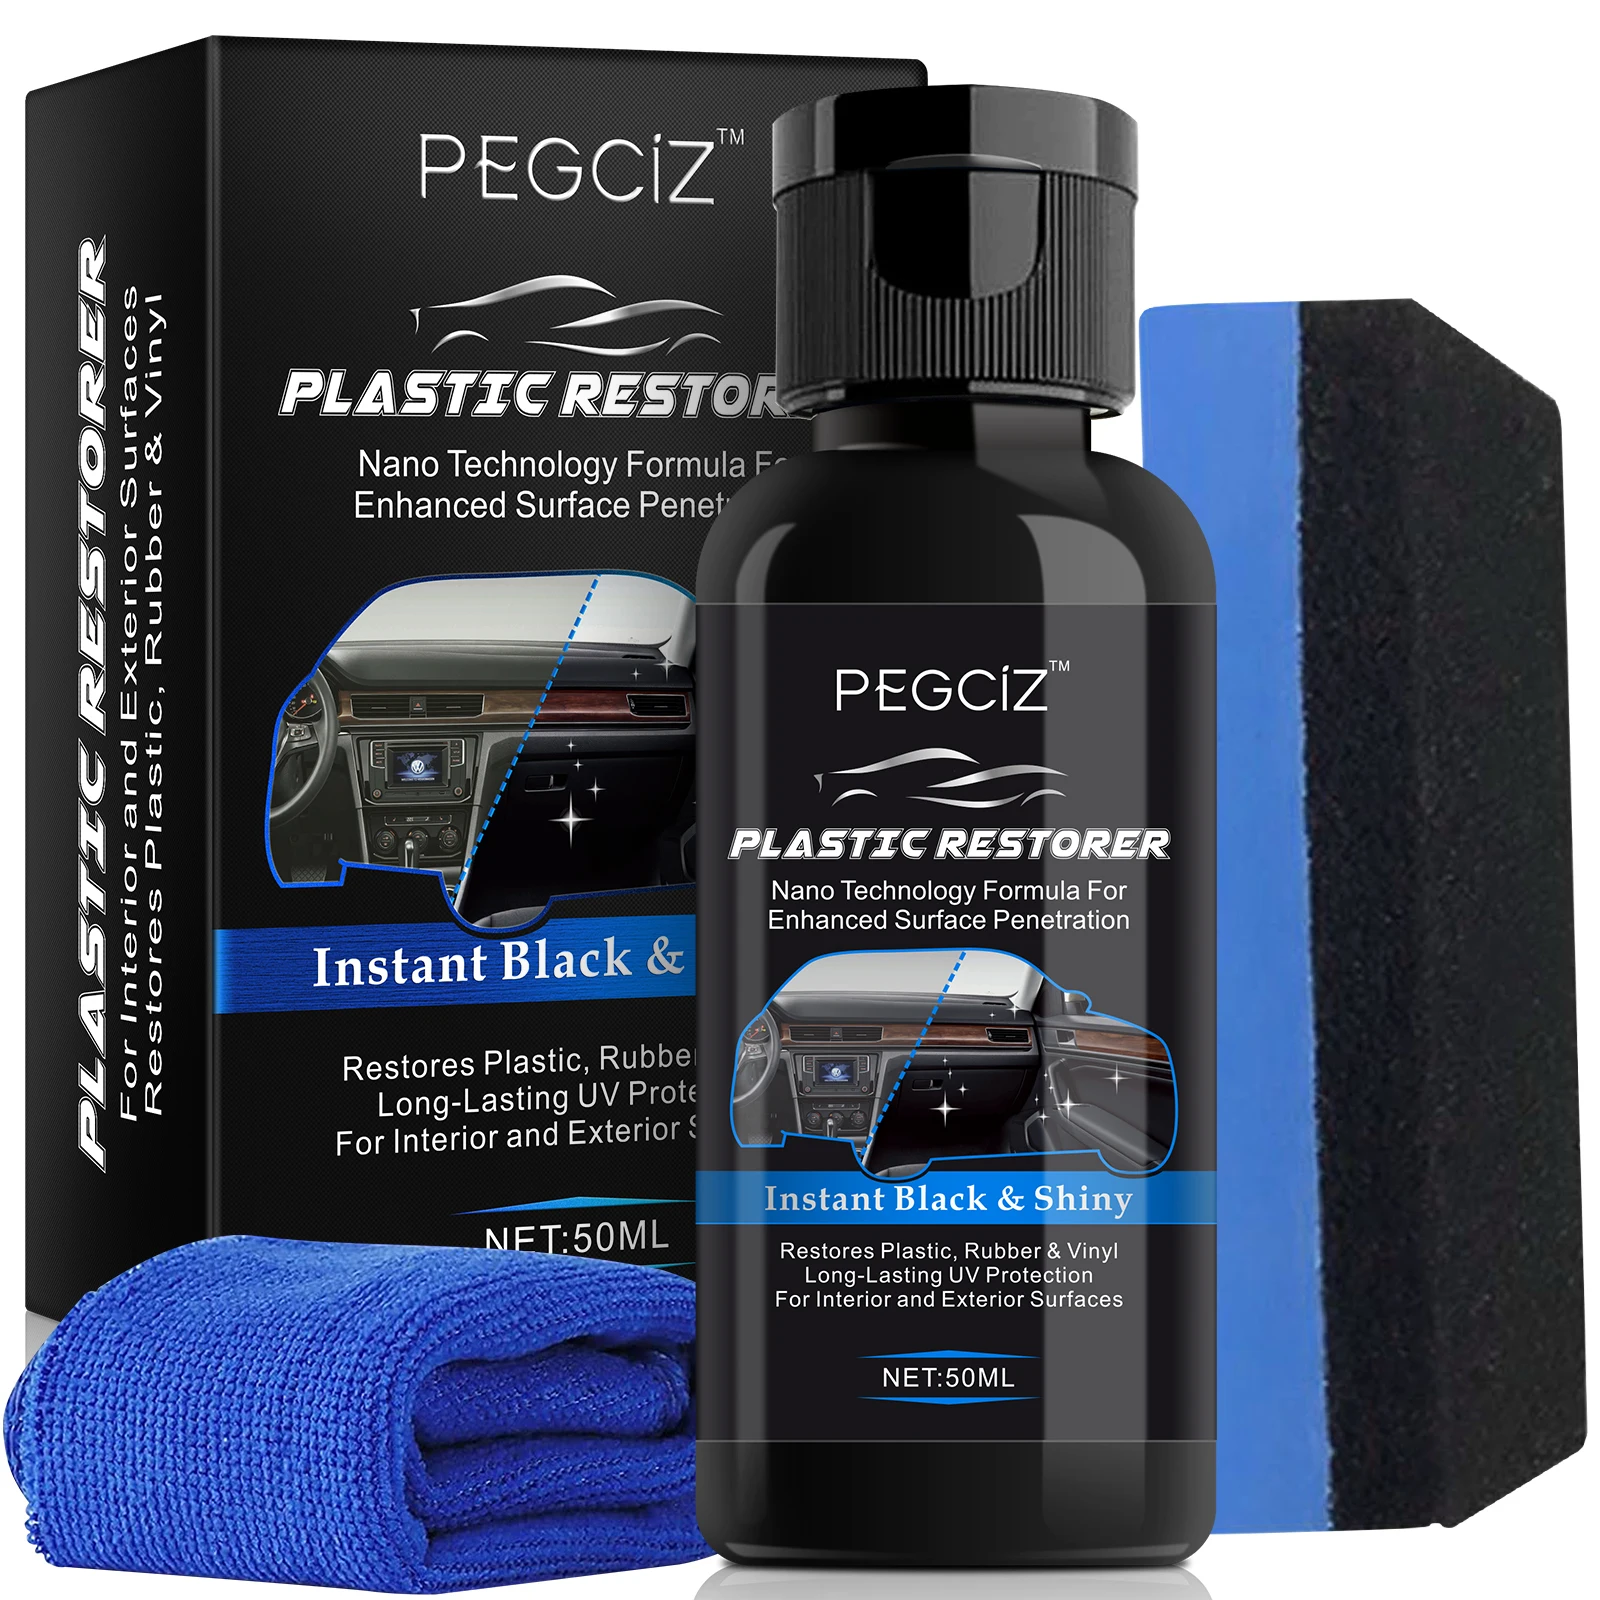 pegciz plastic restorer nano technology formula